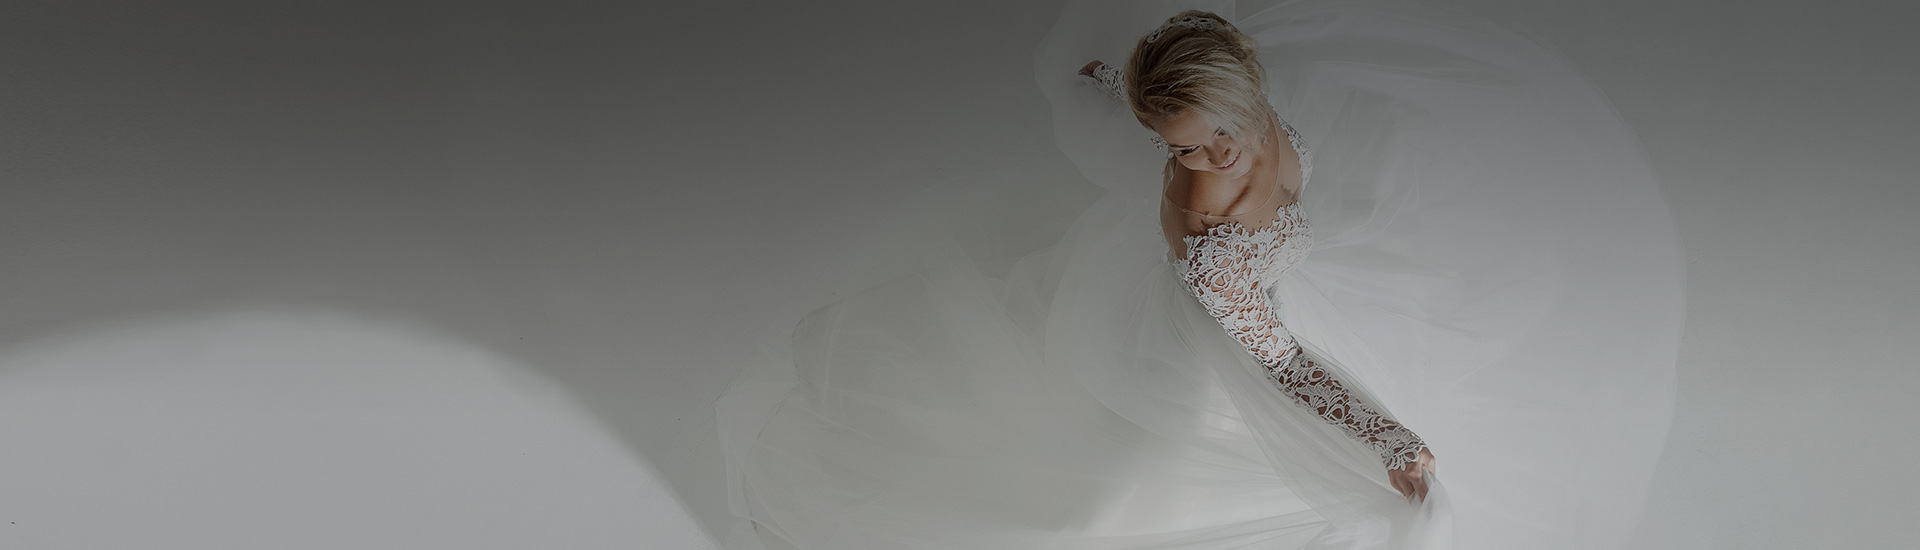 bride spinning in her dress